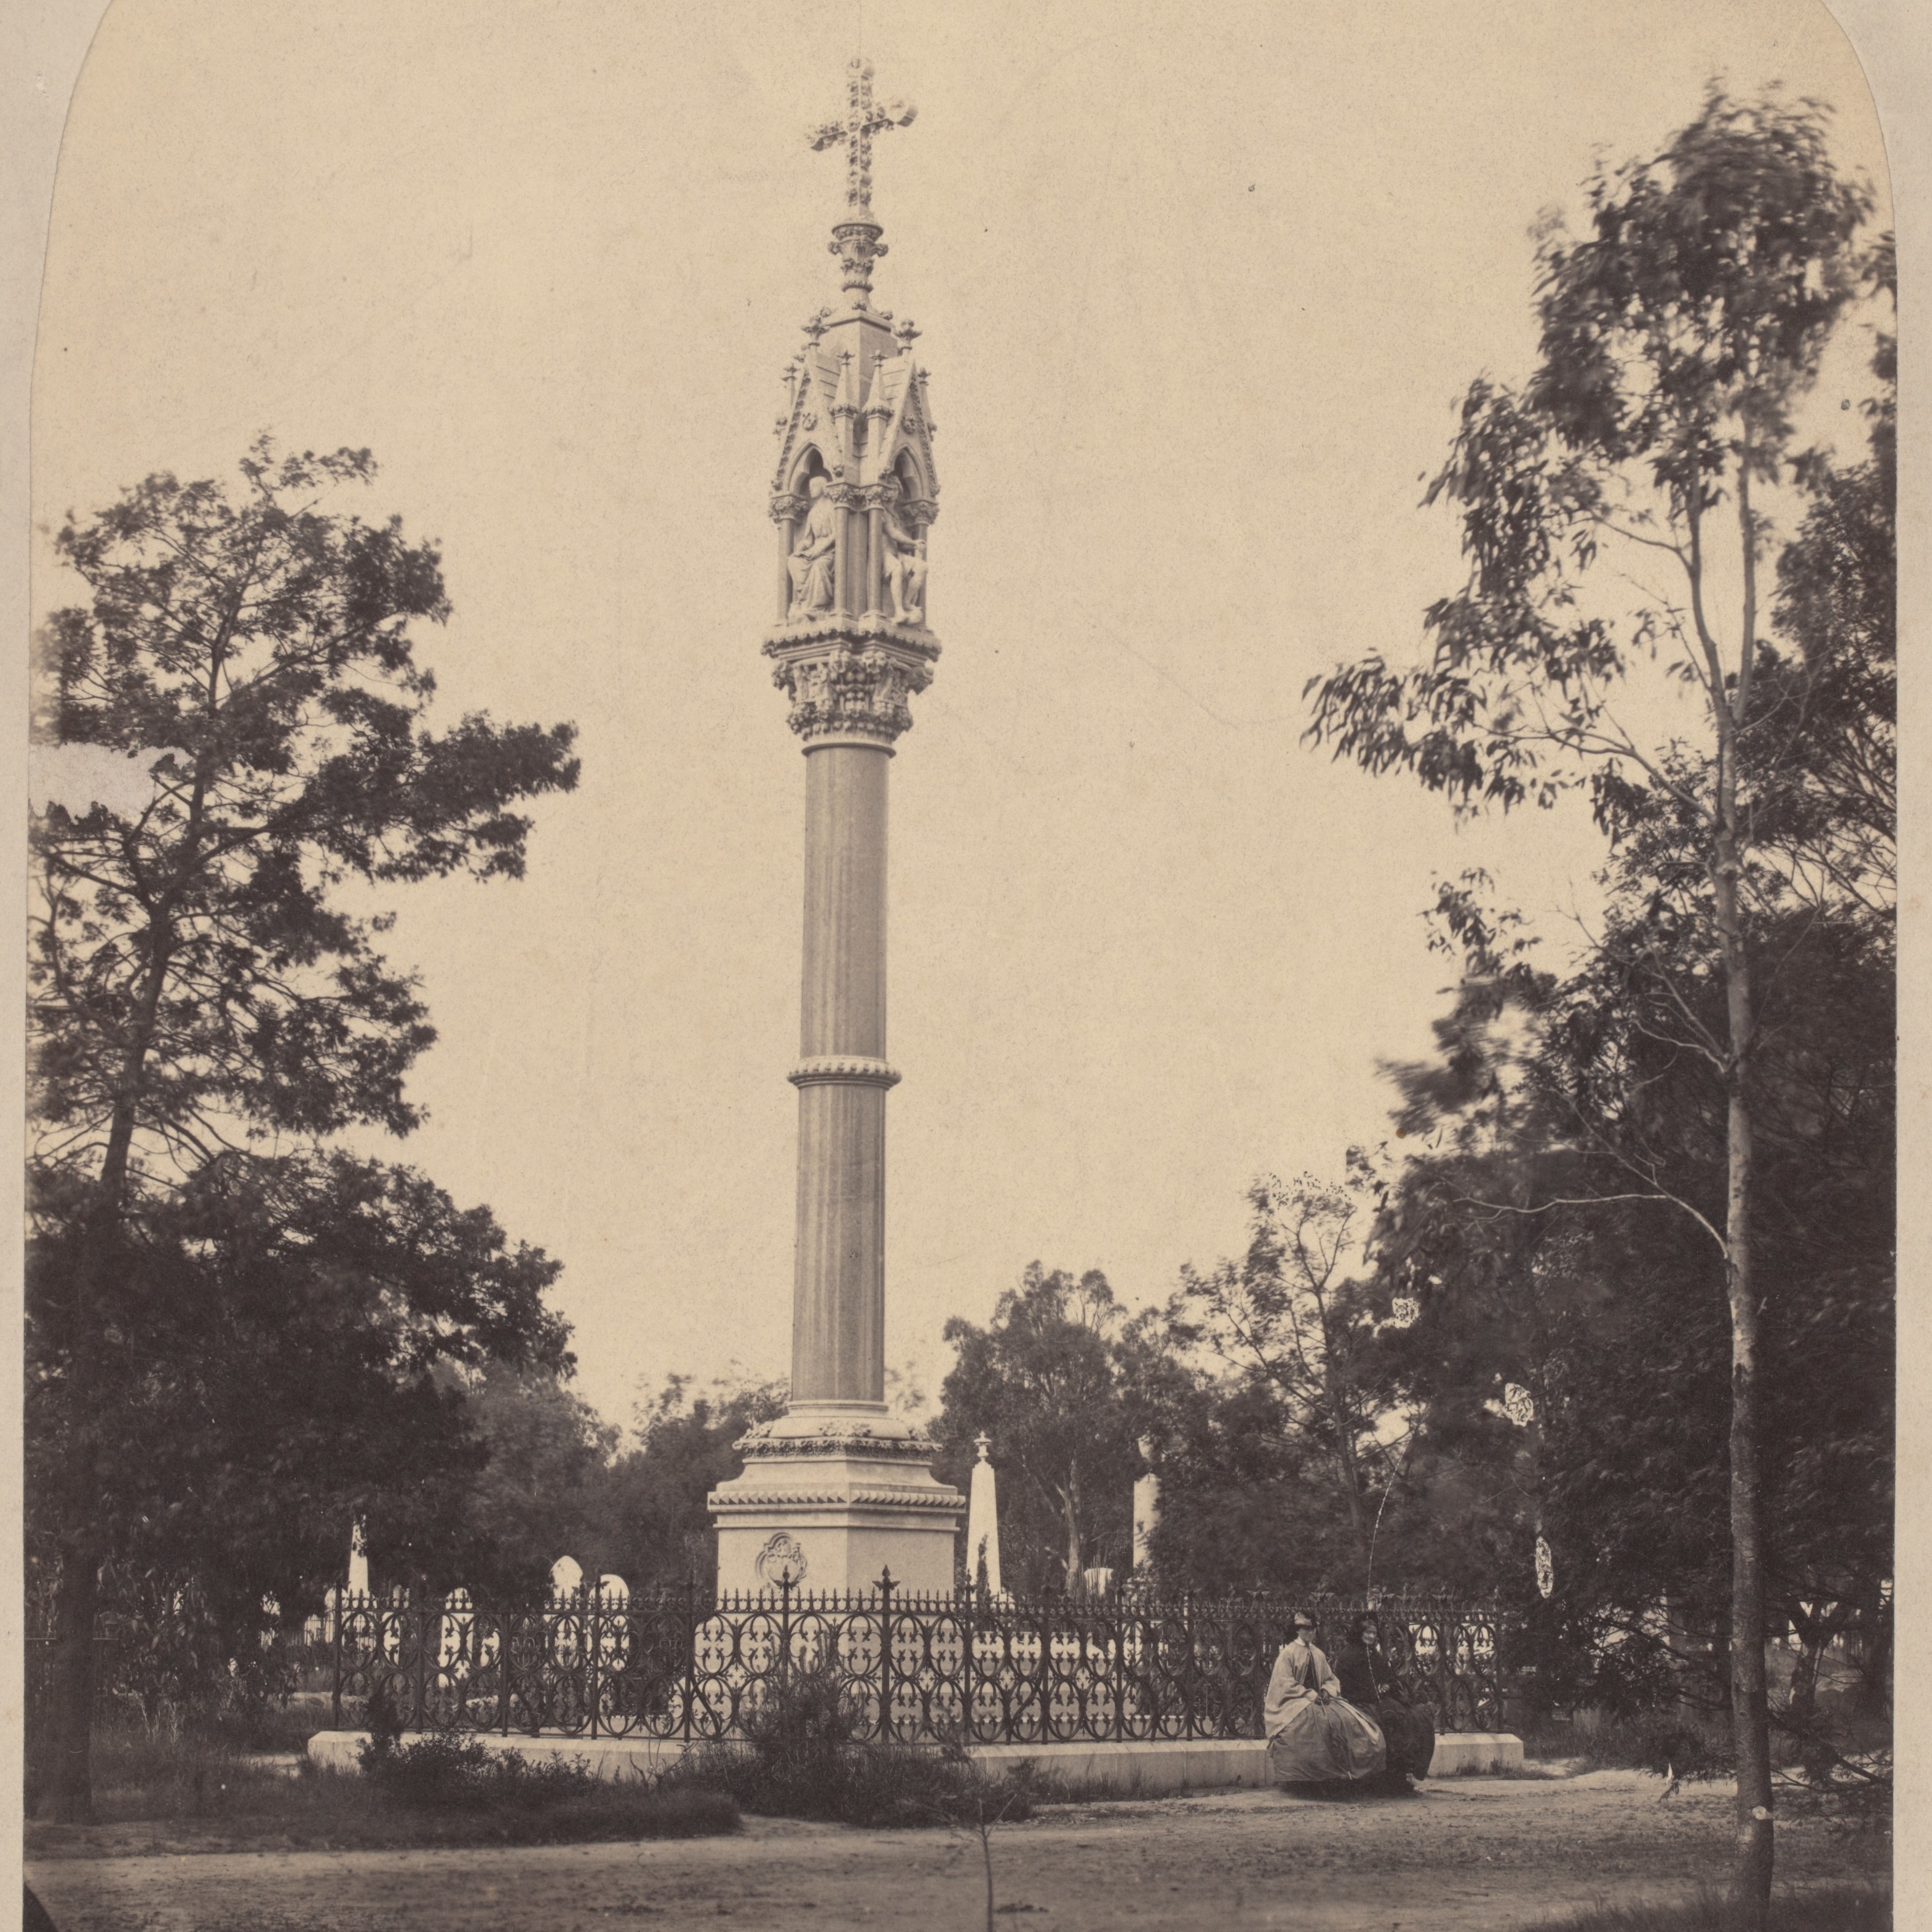 The historic Hotham Monument